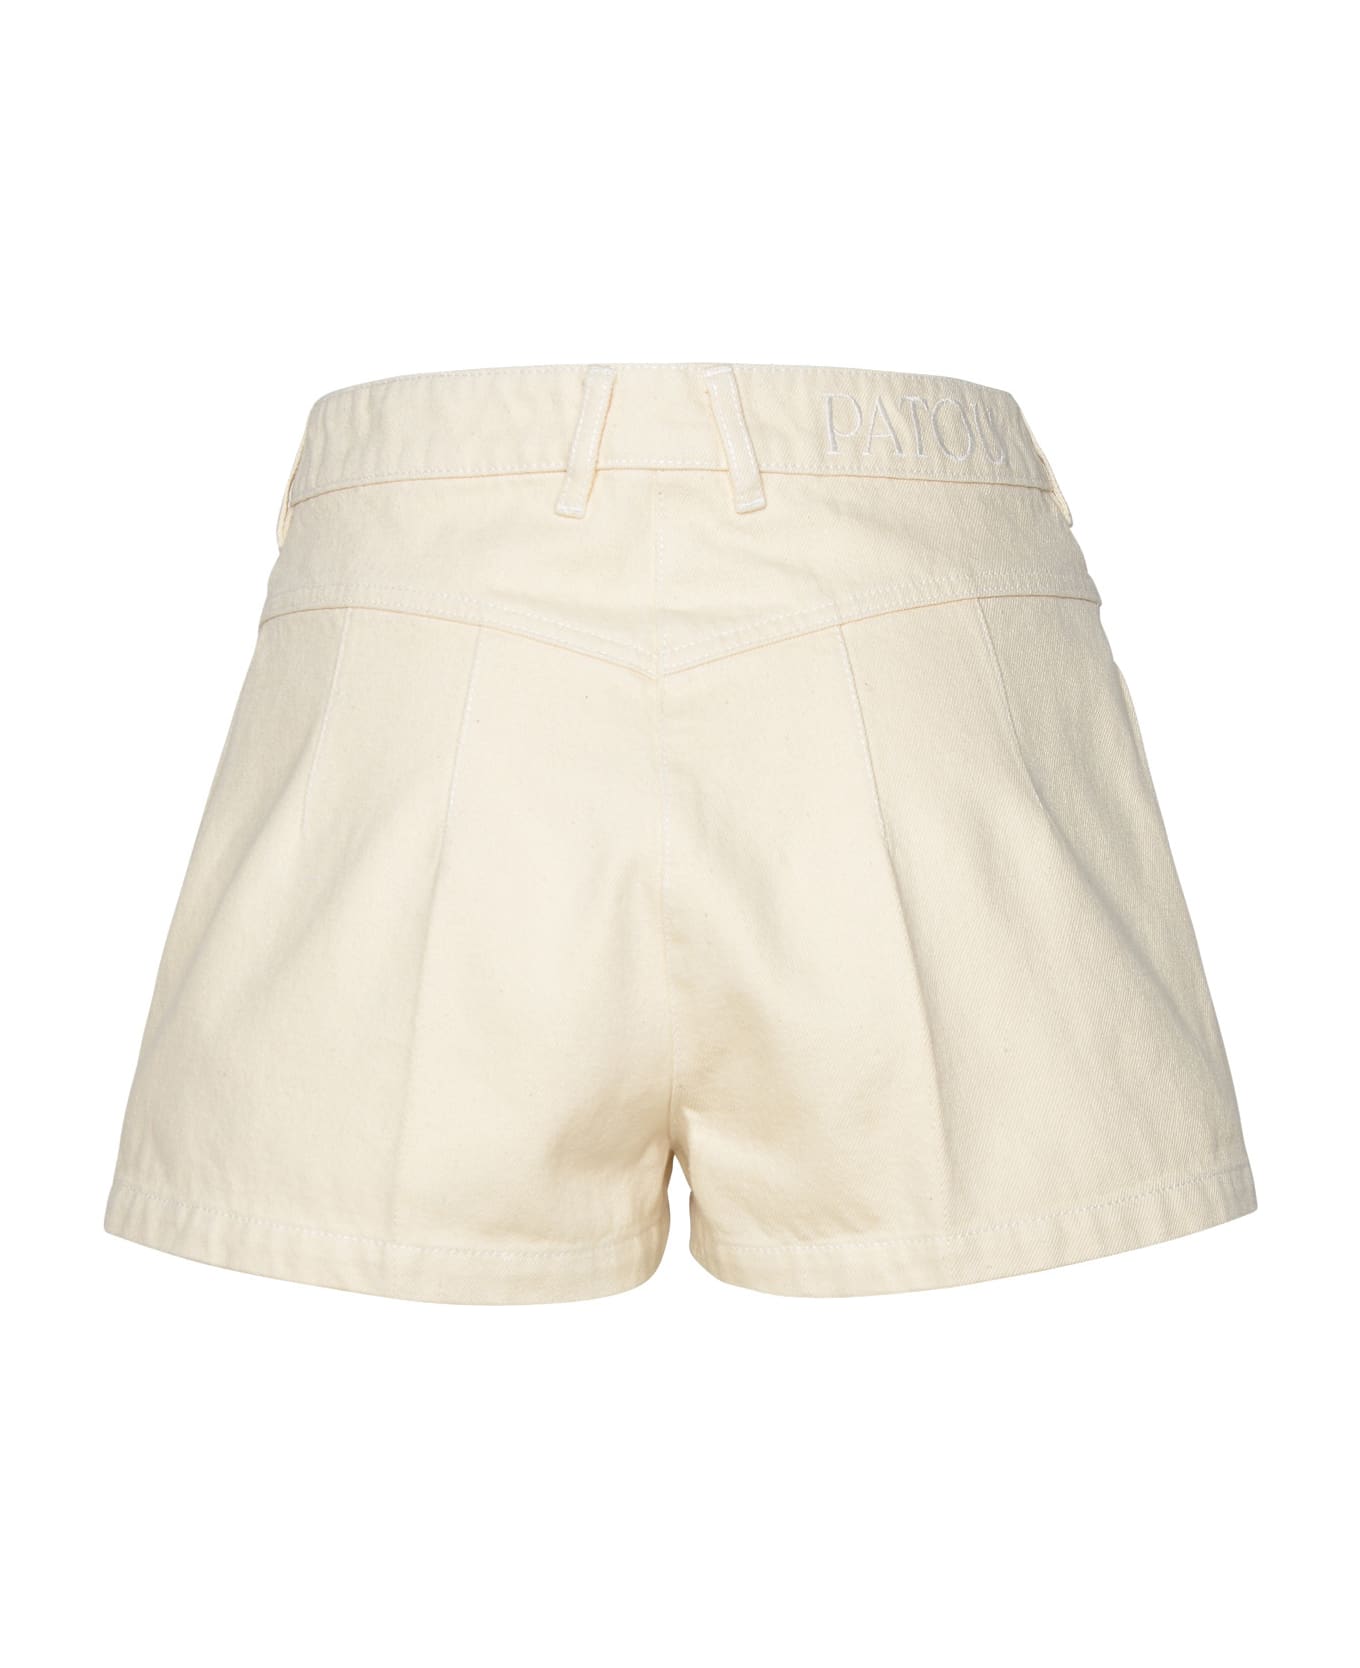 Patou Ivory Cotton Mini Shorts - Beige ショートパンツ